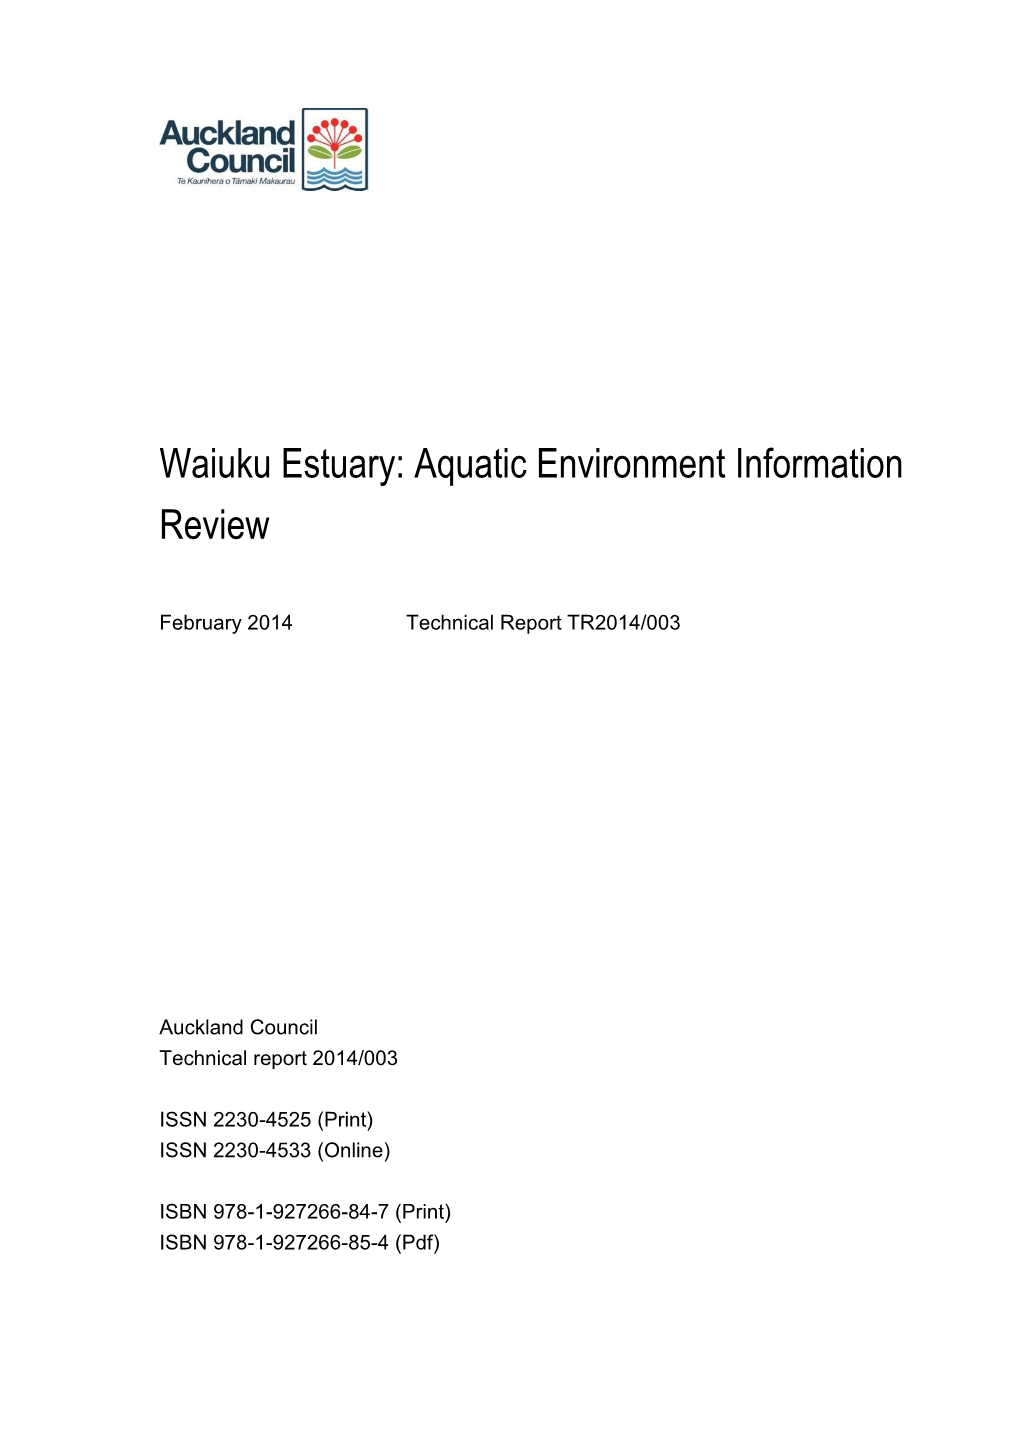 Waiuku Estuary: Aquatic Environment Information Review